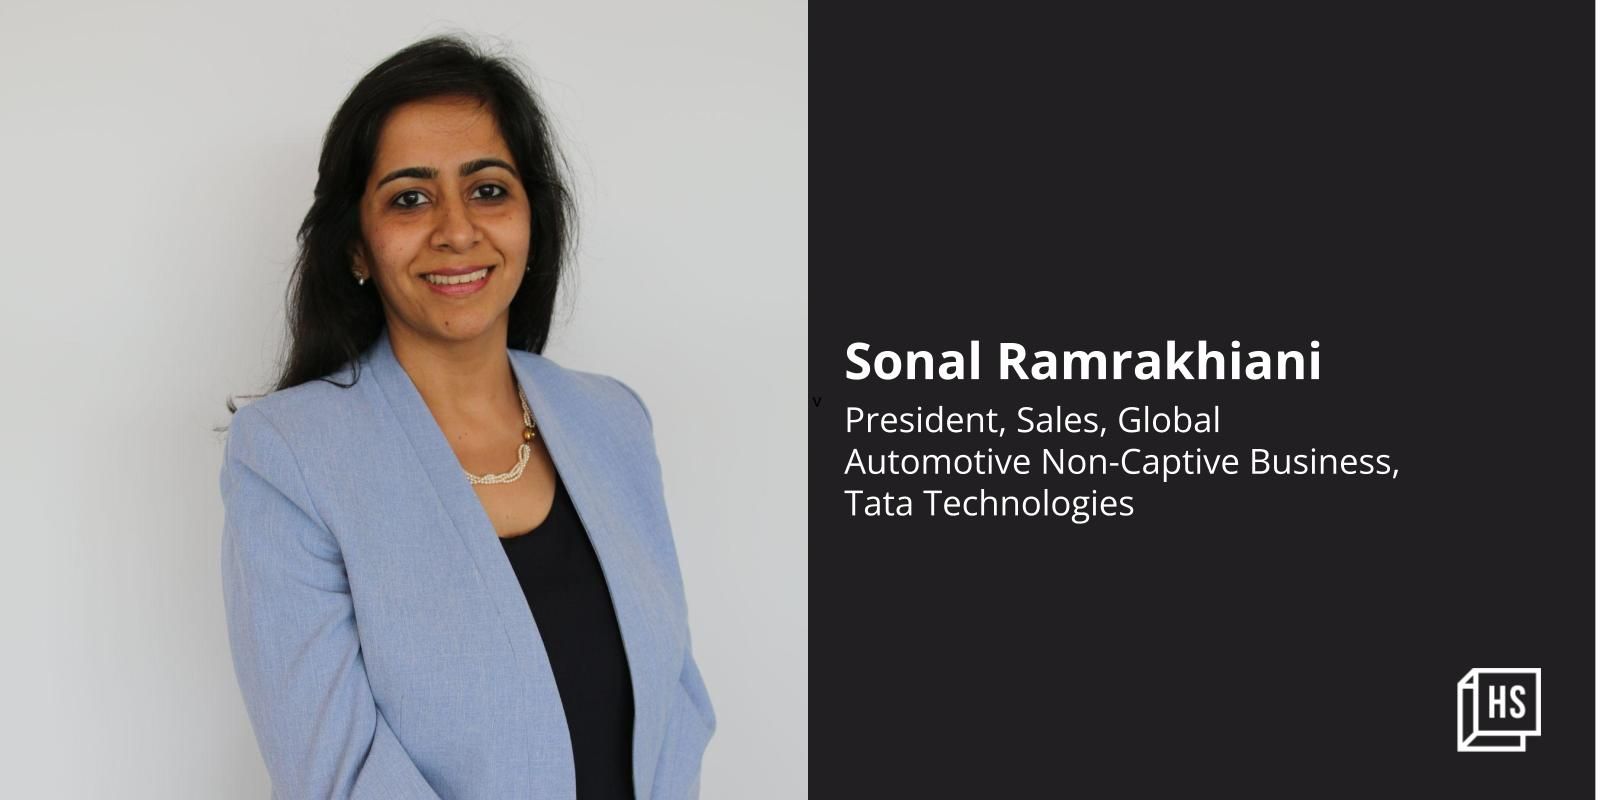 Onus is on women leaders to groom and mentor more women: Sonal Ramrakhiani of Tata Technologies